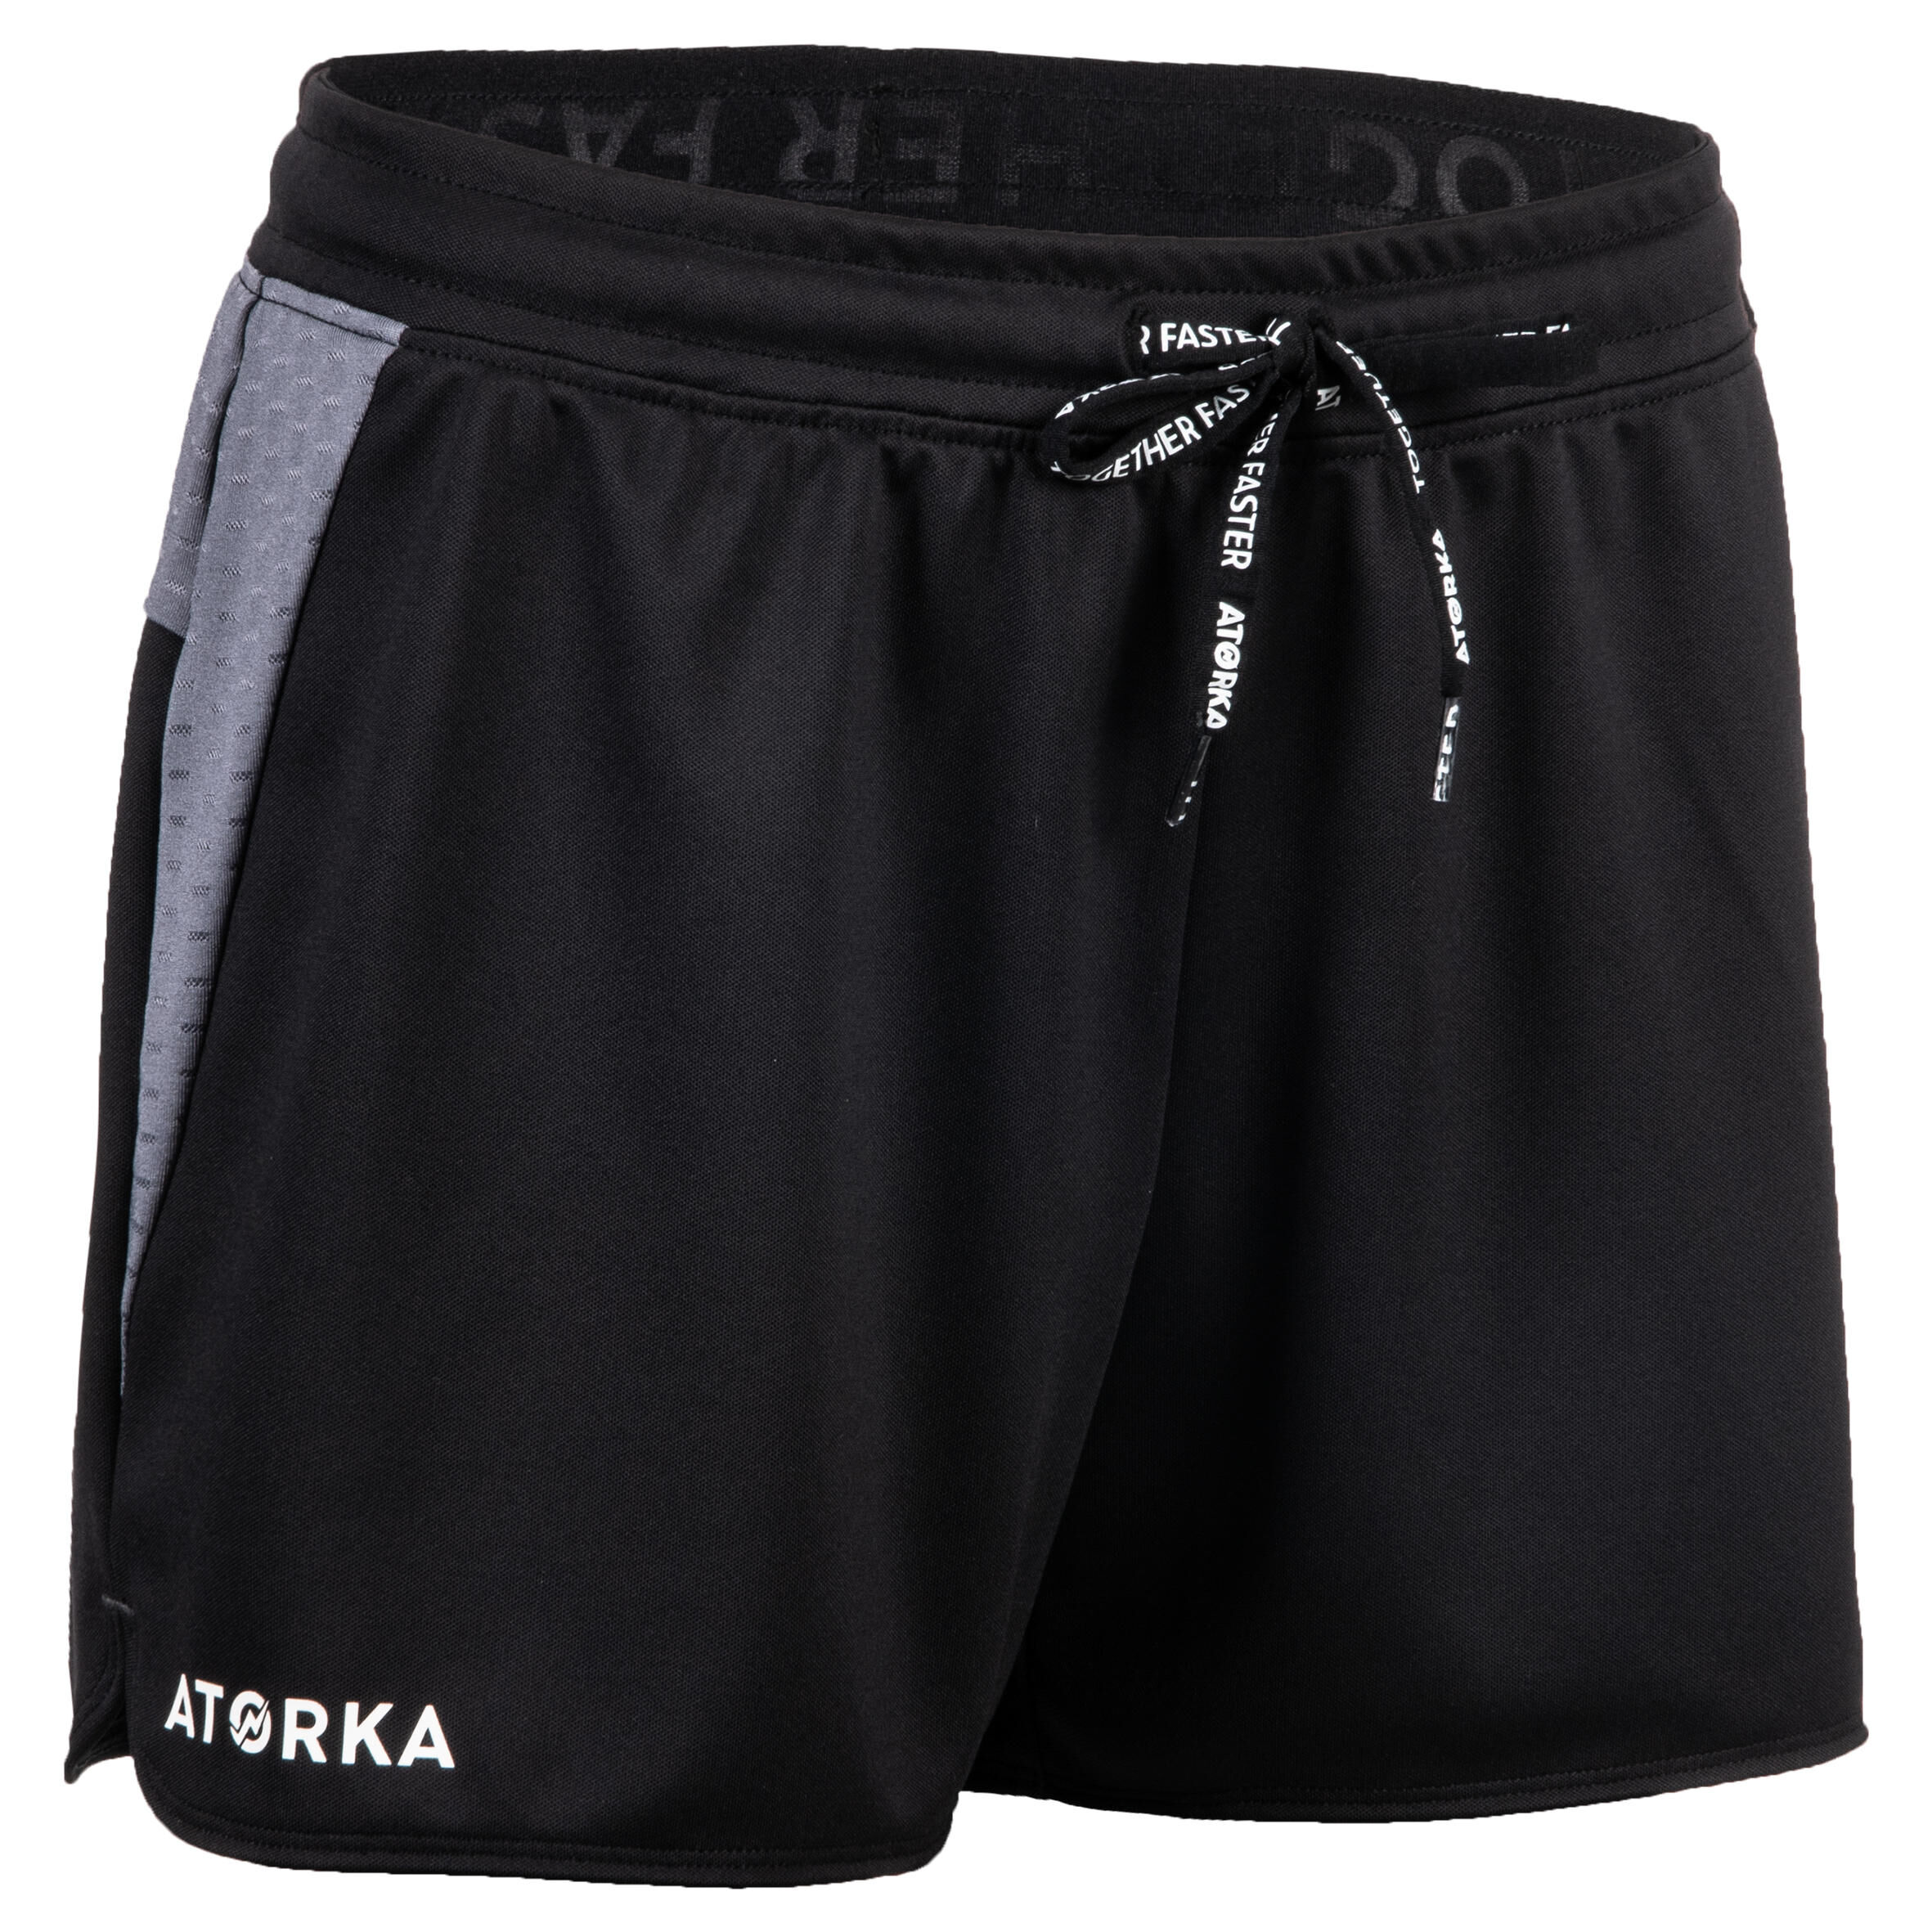 ATORKA H500 Women's Handball Shorts - Black/Grey